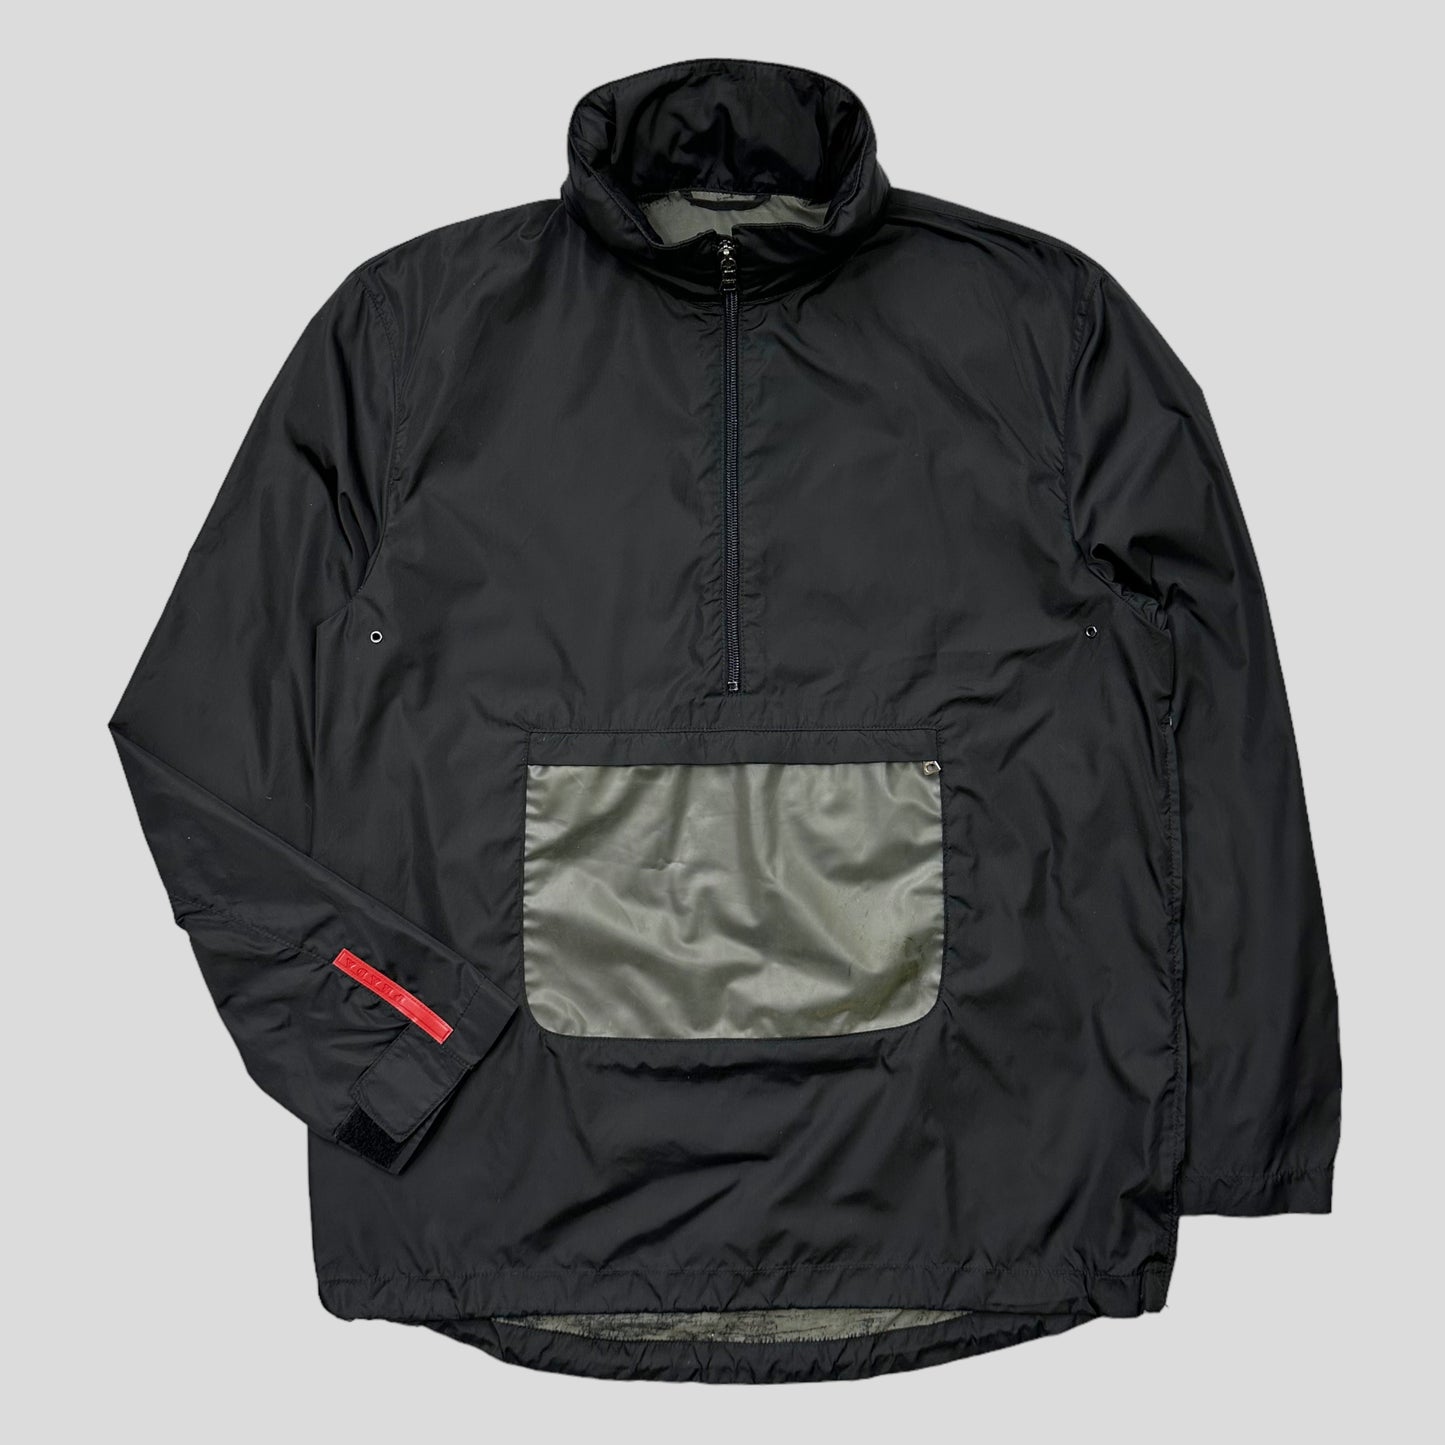 Prada Sport SS99 Latex Pocket Nylon Pullover Jacket - IT40